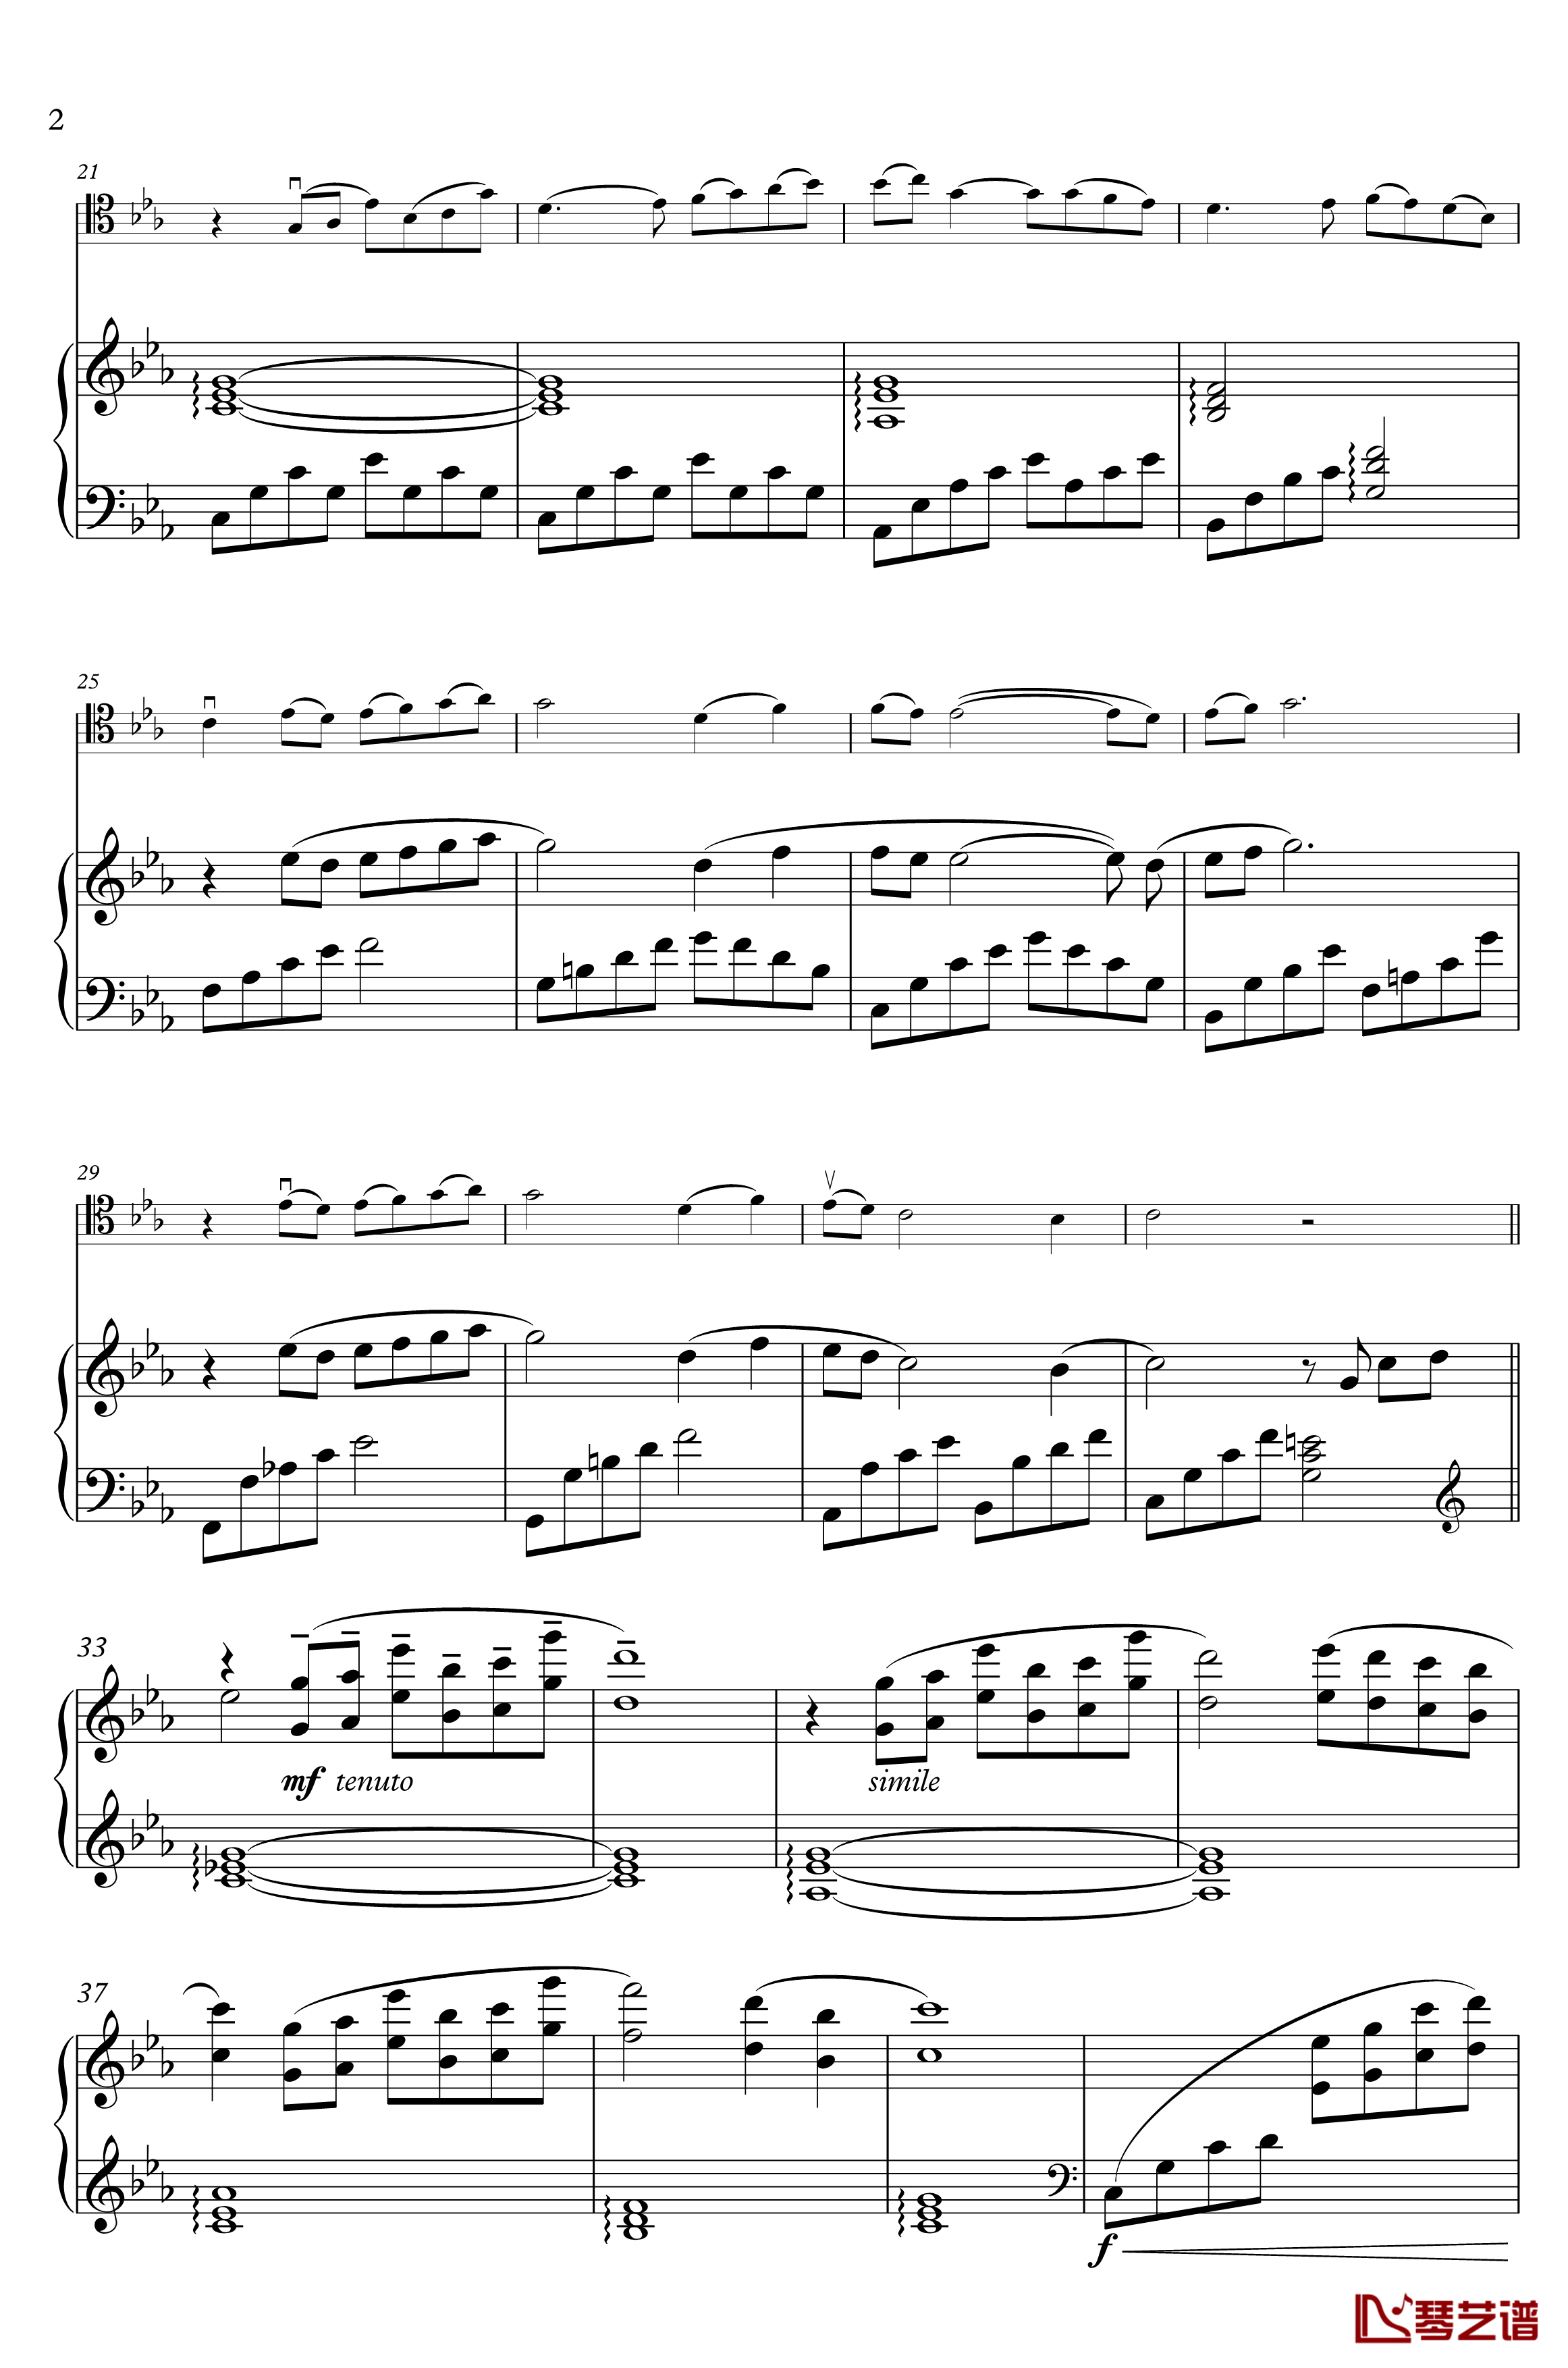 The guidance of a white tower - 大提琴&amp;amp;钢琴二重奏-jdk-钢琴谱